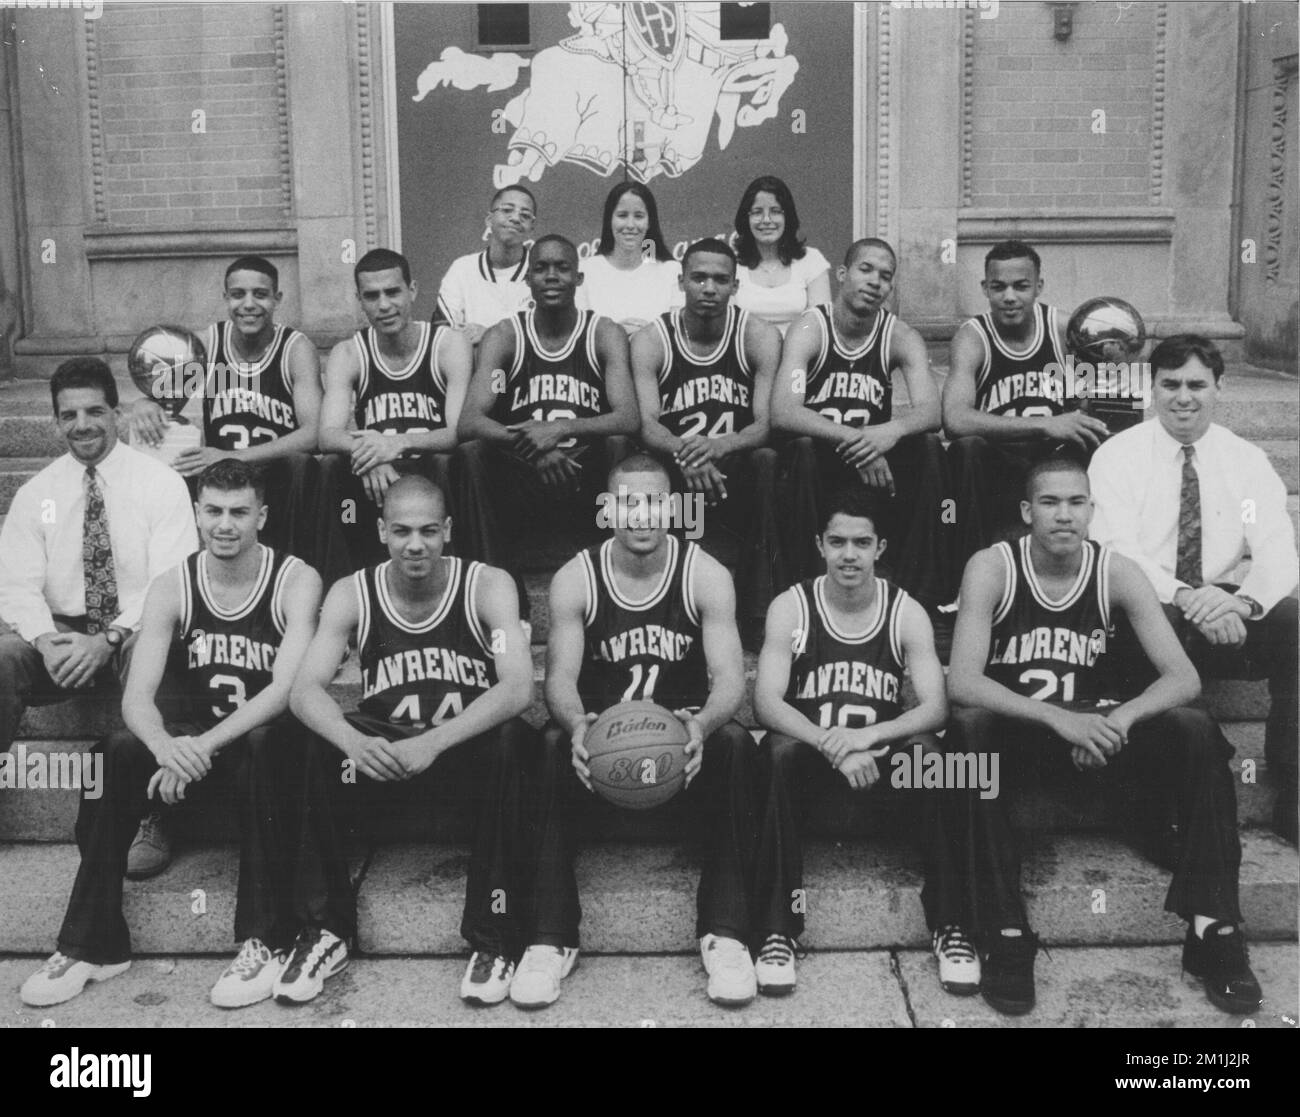 1995 Lawrence High School basketball team , Basketball players, Lawrence High School Lawrence, Mass. Stock Photo